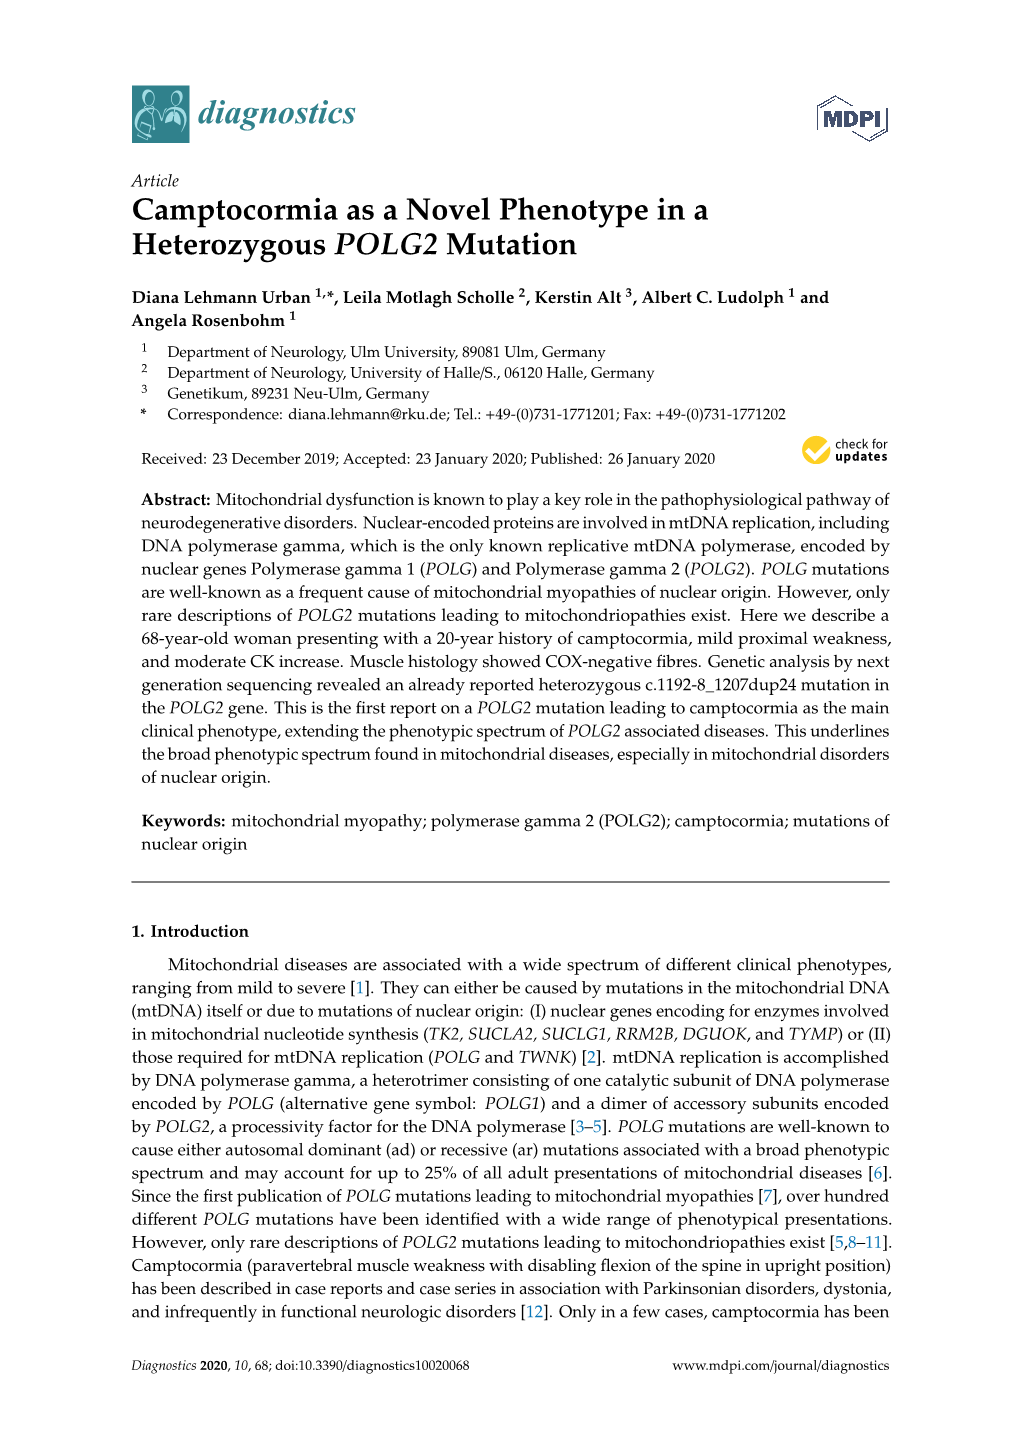 Camptocormia As a Novel Phenotype in a Heterozygous POLG2 Mutation